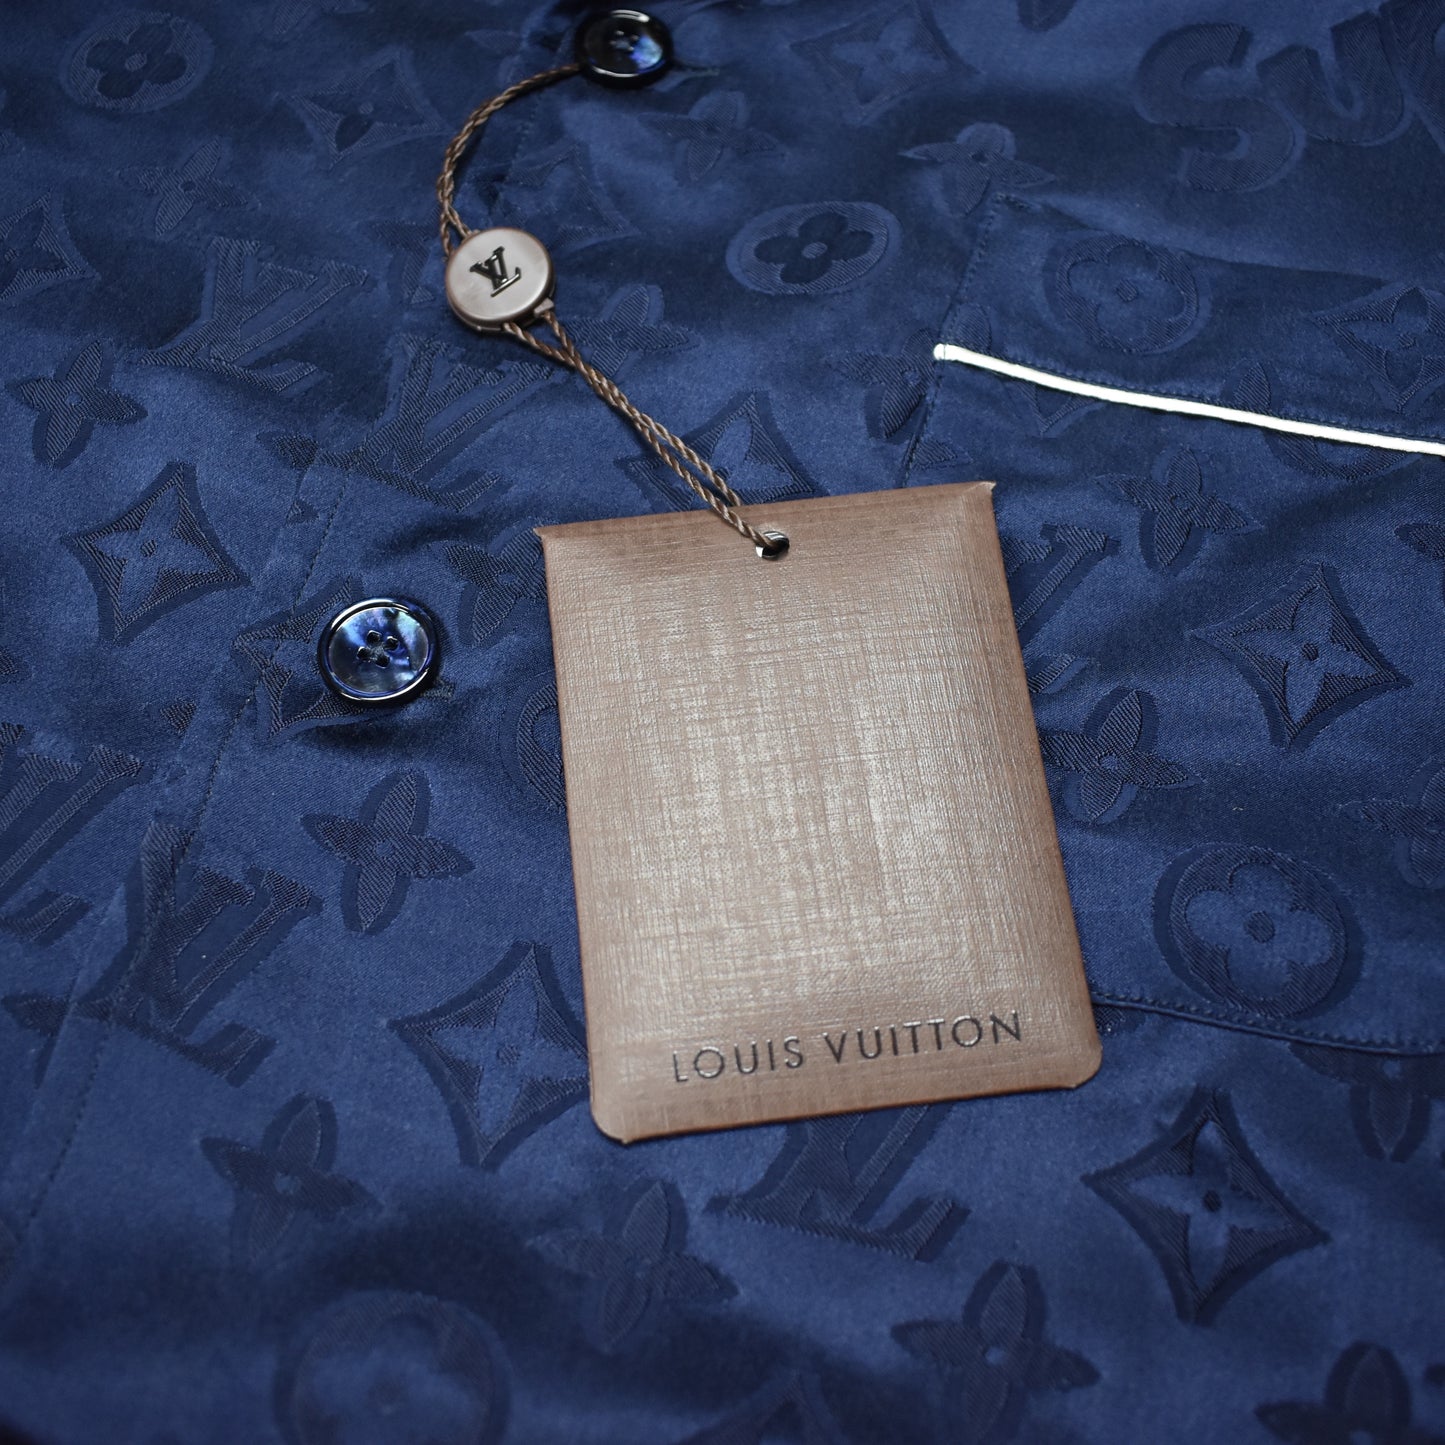 Louis Vuitton Supreme Monogram Pajama Shirt